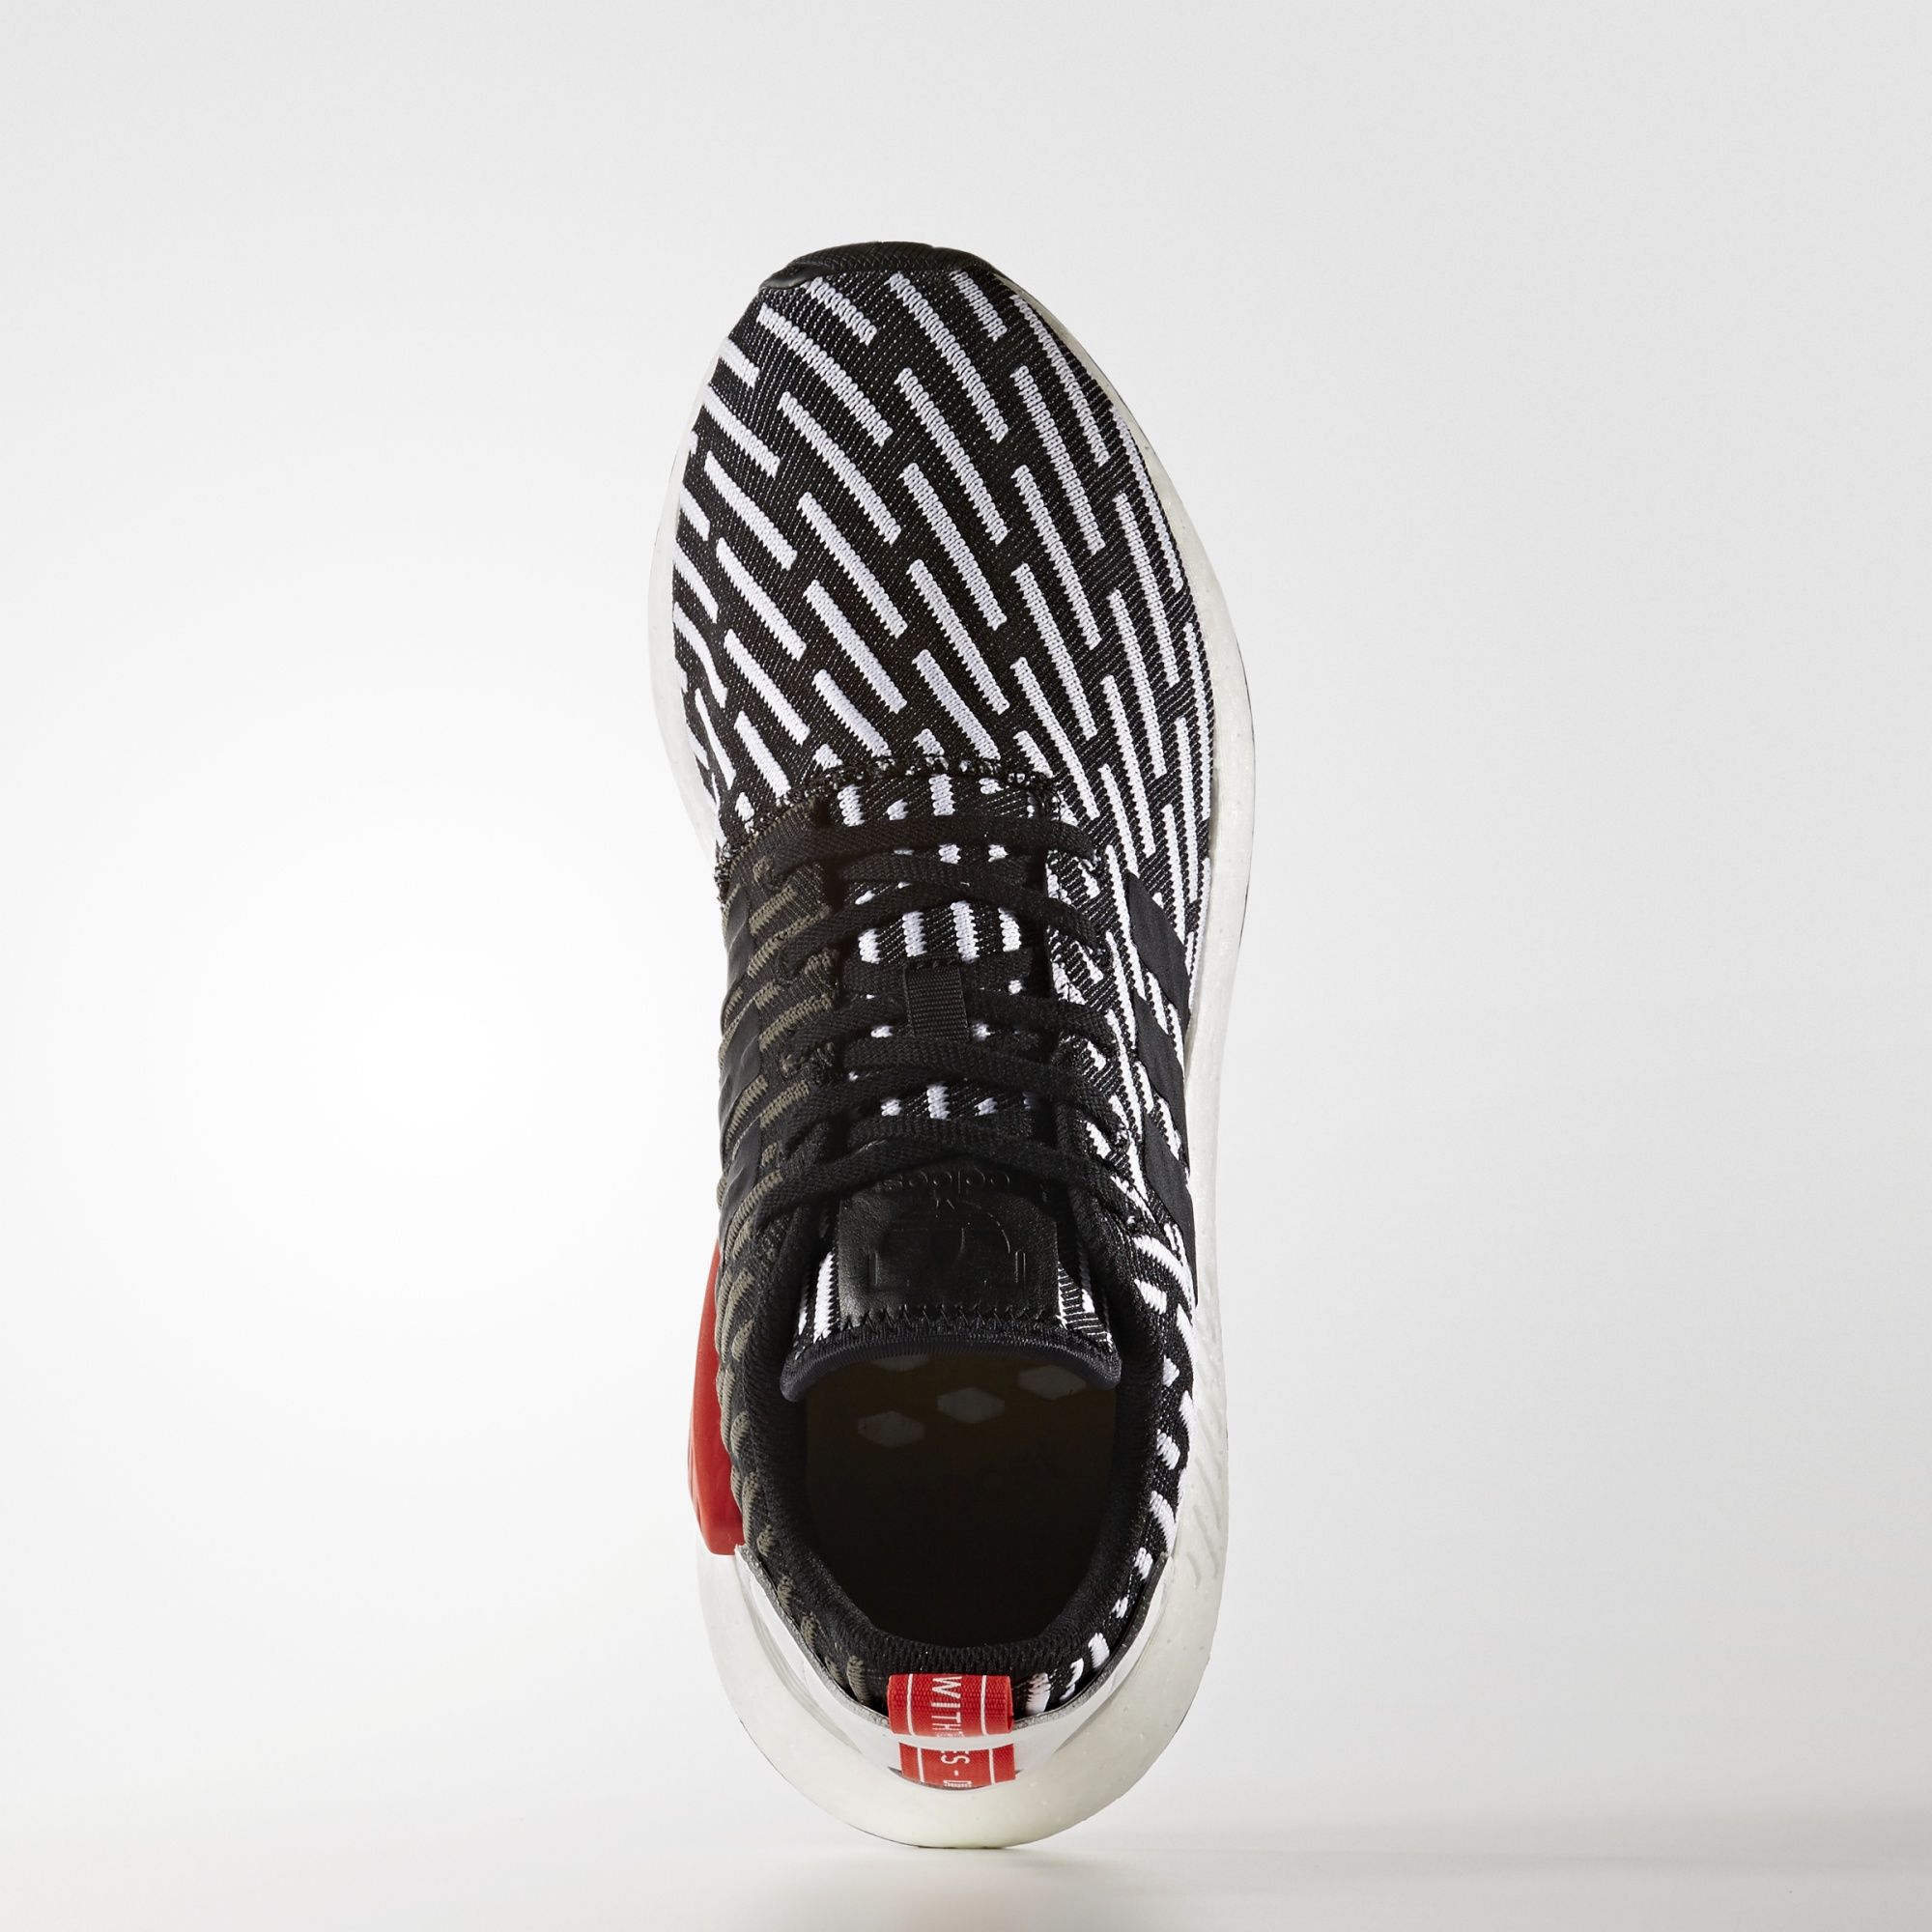 Adidas NMD_R2 Primeknit
Core Black / Footwear White